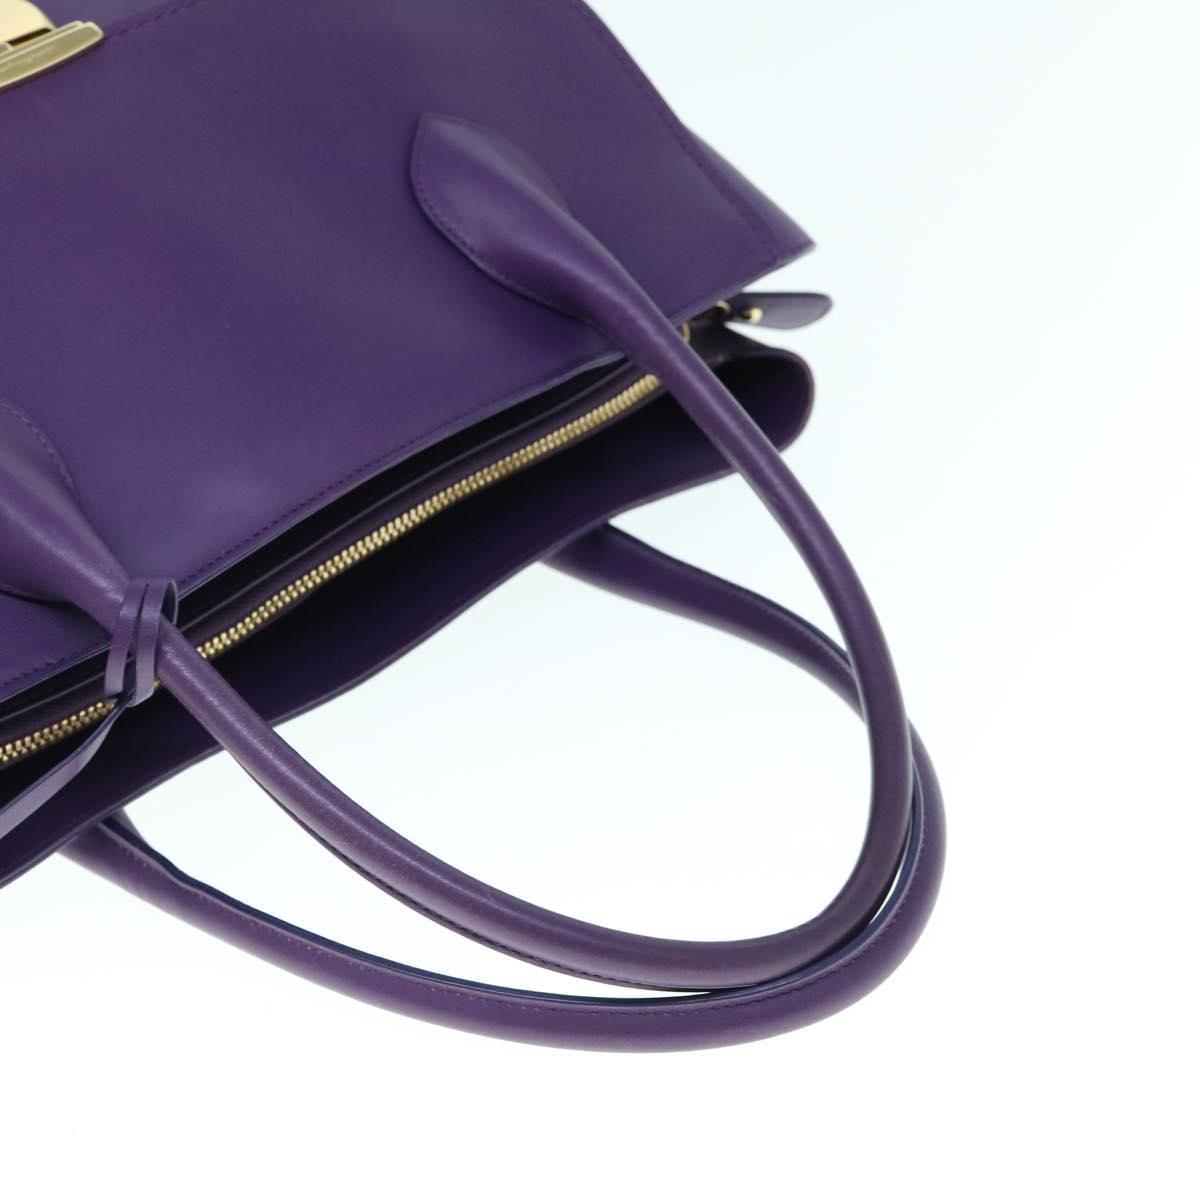 Salvatore Ferragamo Tote Bag Leather Purple Auth ar11137